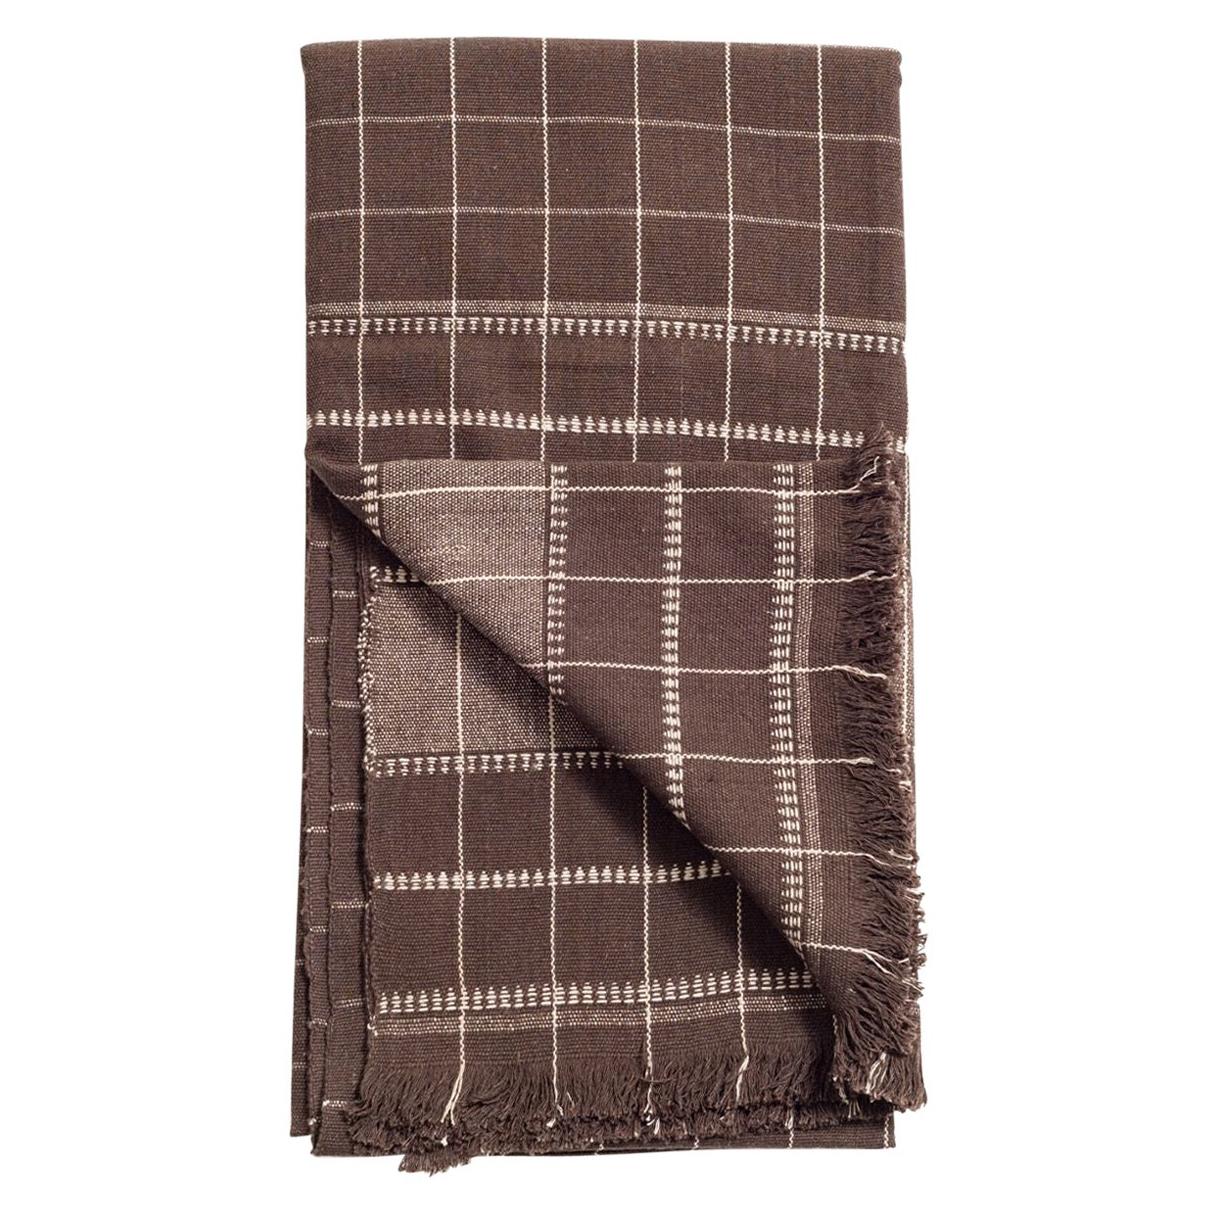 Treacle Dark Brown Handloom Queen Size Bedspread / Coverlet Soft Organic Cotton